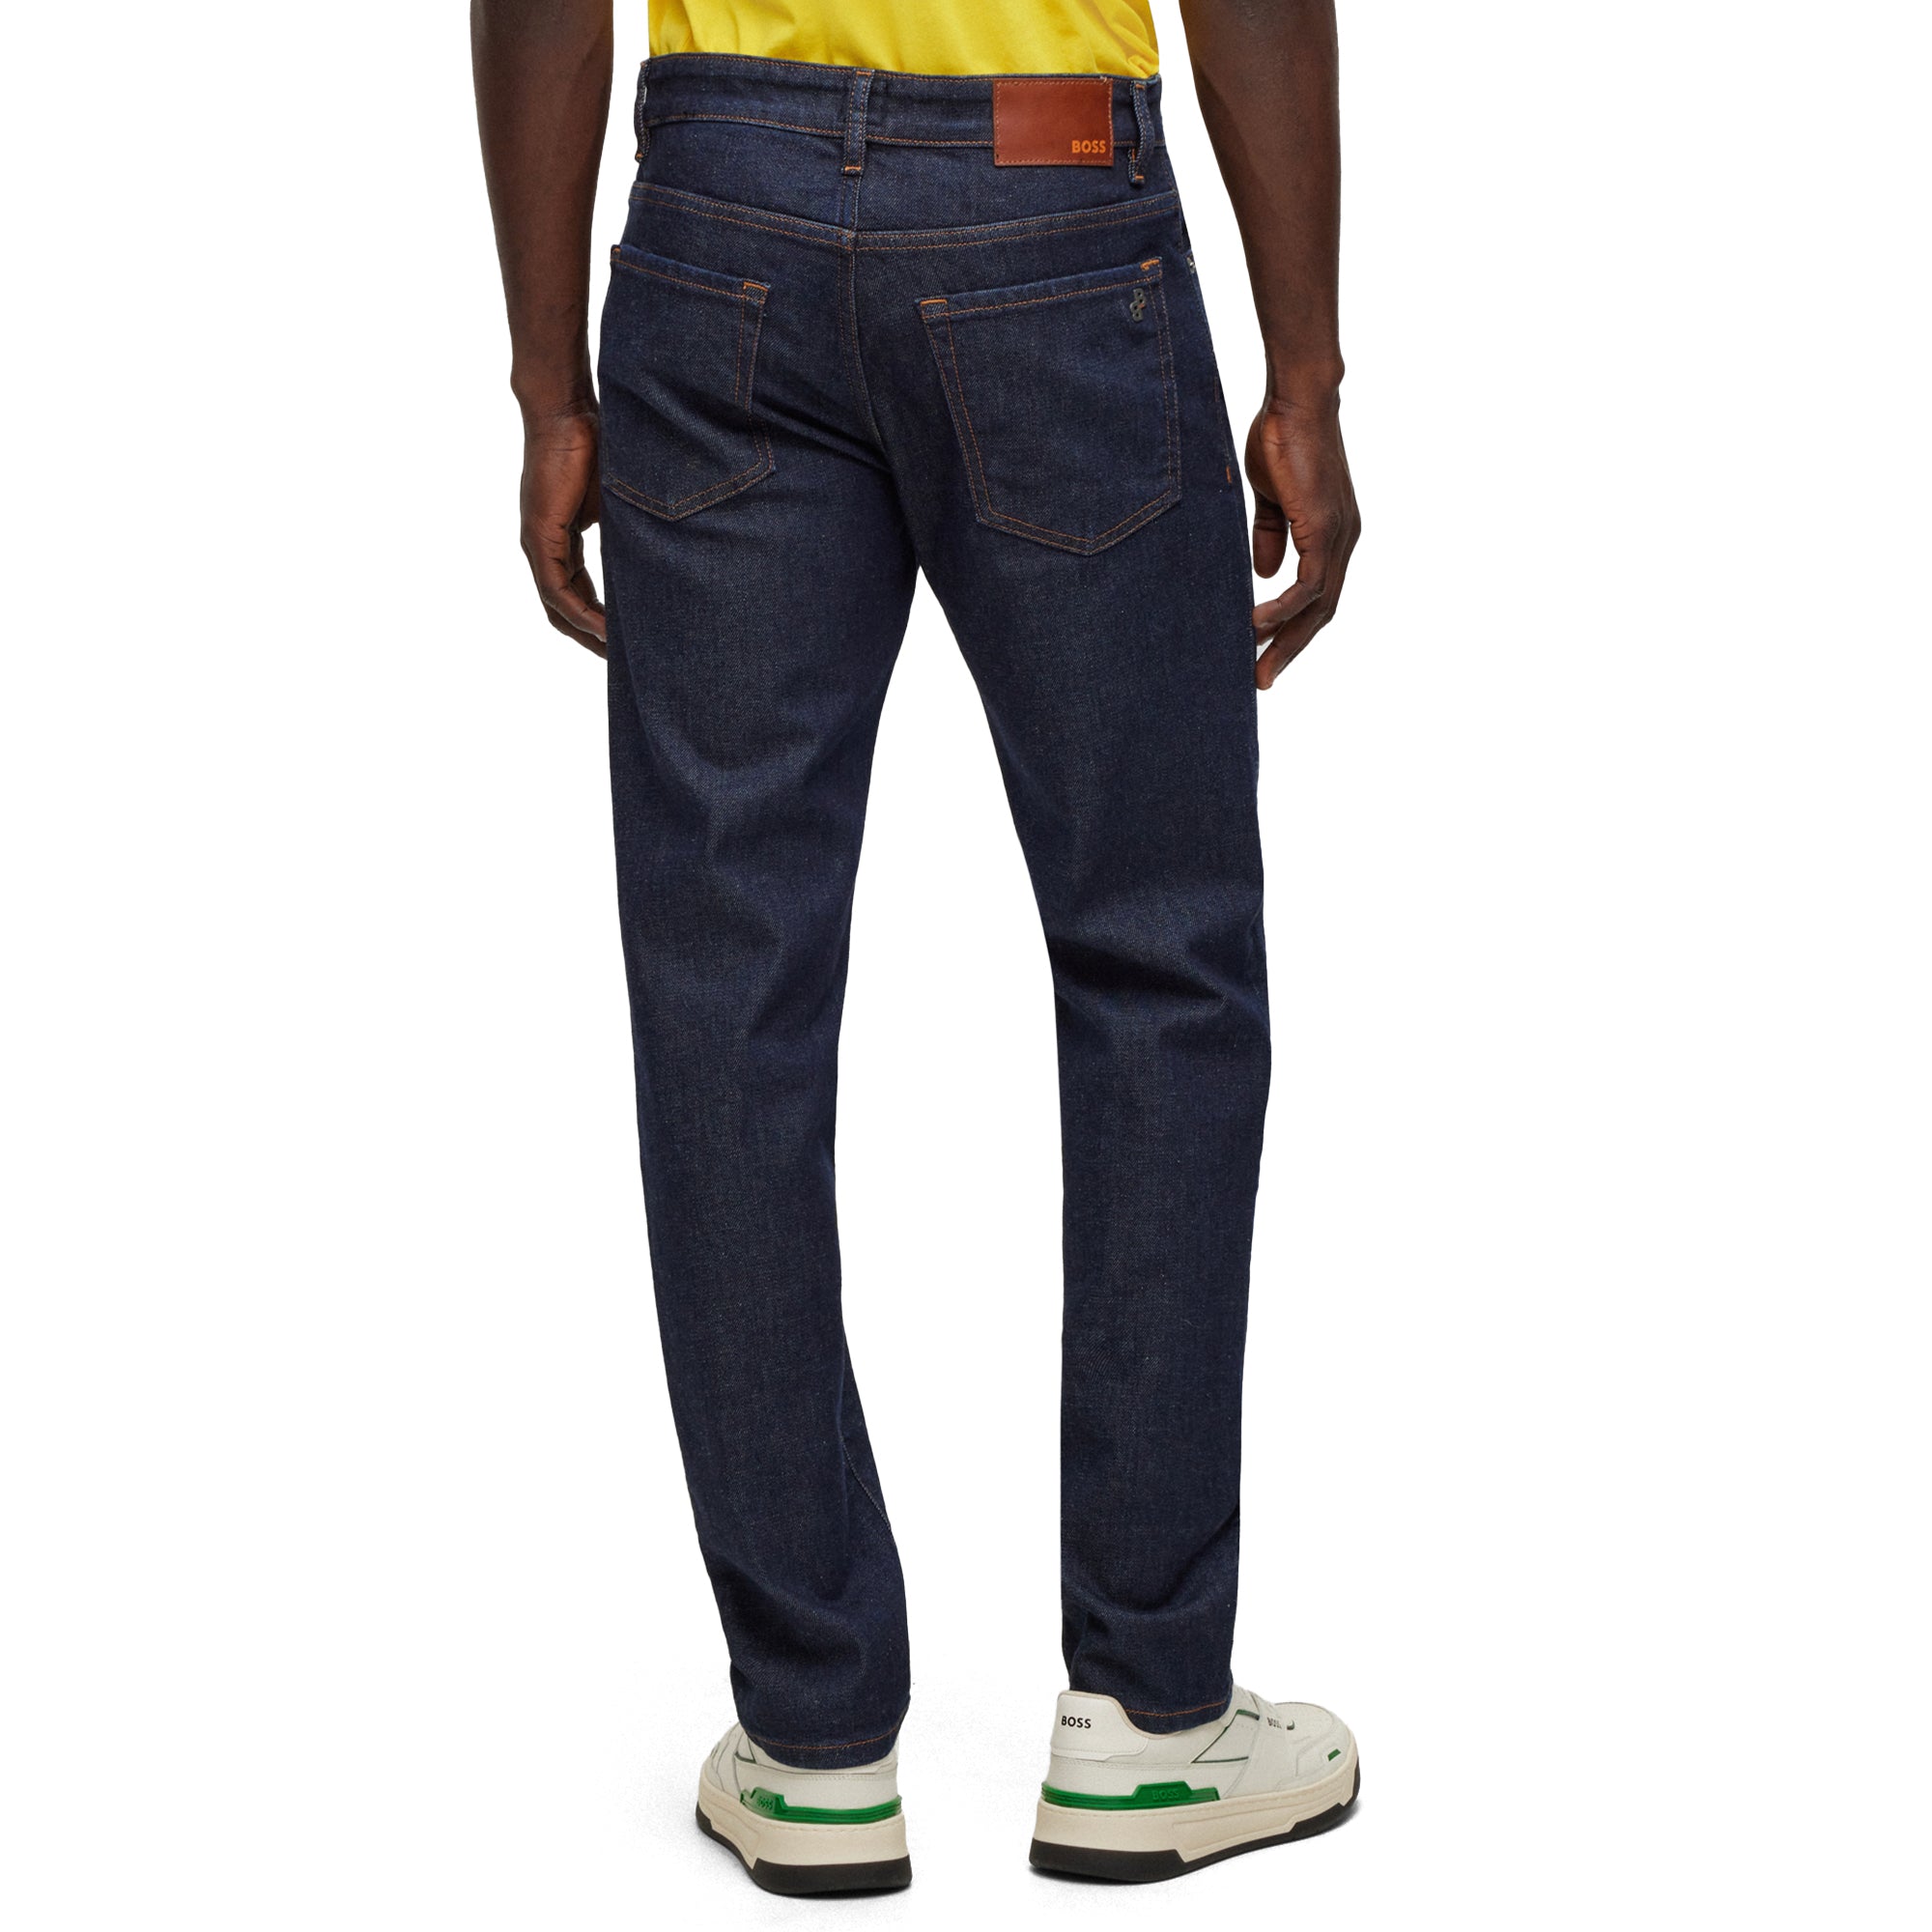 BOSS - Regular-fit jeans in mid-blue rigid denim